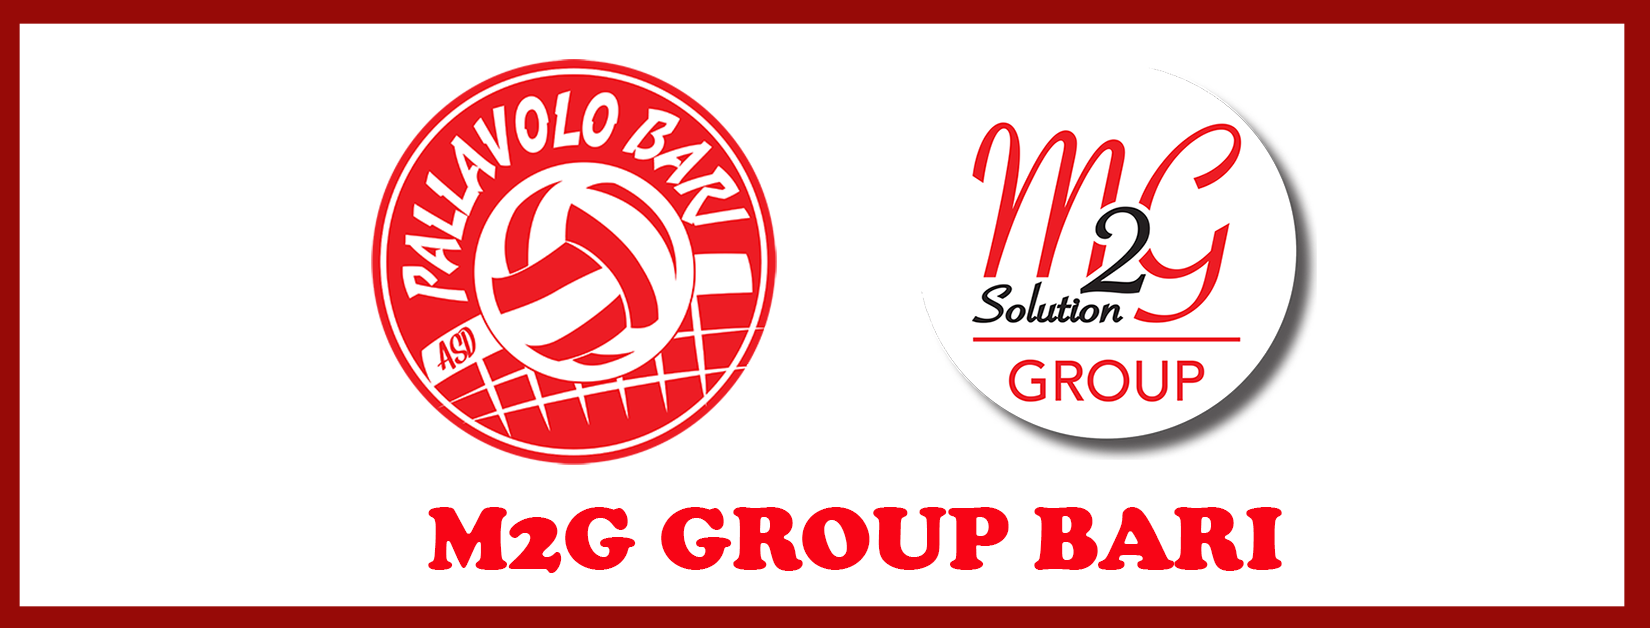 M2G Group nuovo main sponsor Pallavolo Bari